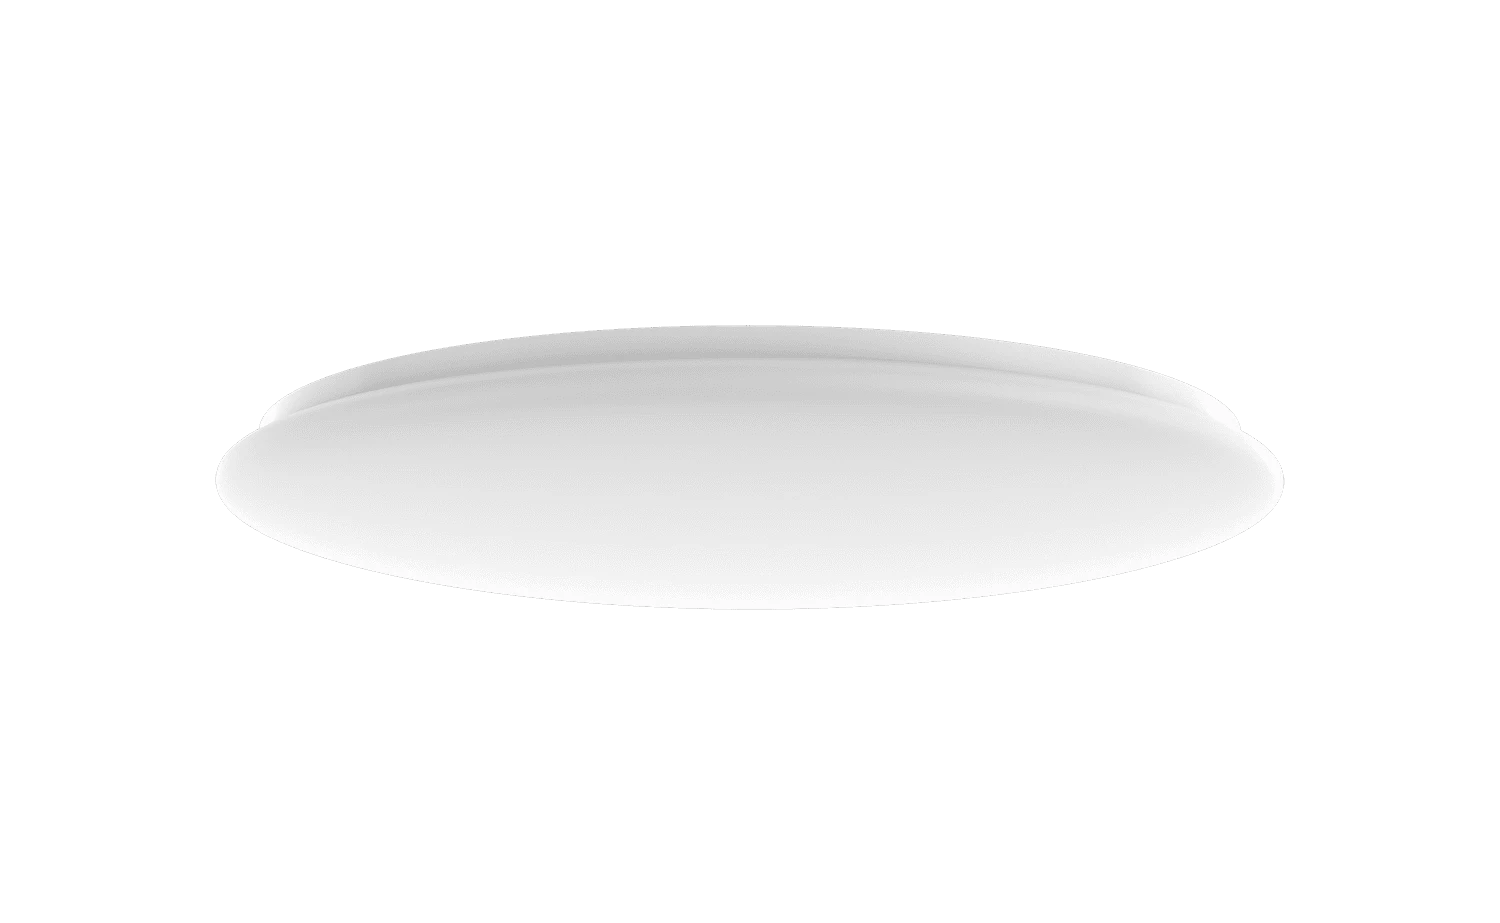 Yeelight Arwen 550C smart ceiling lamp - 4500lm, ⌀598mm